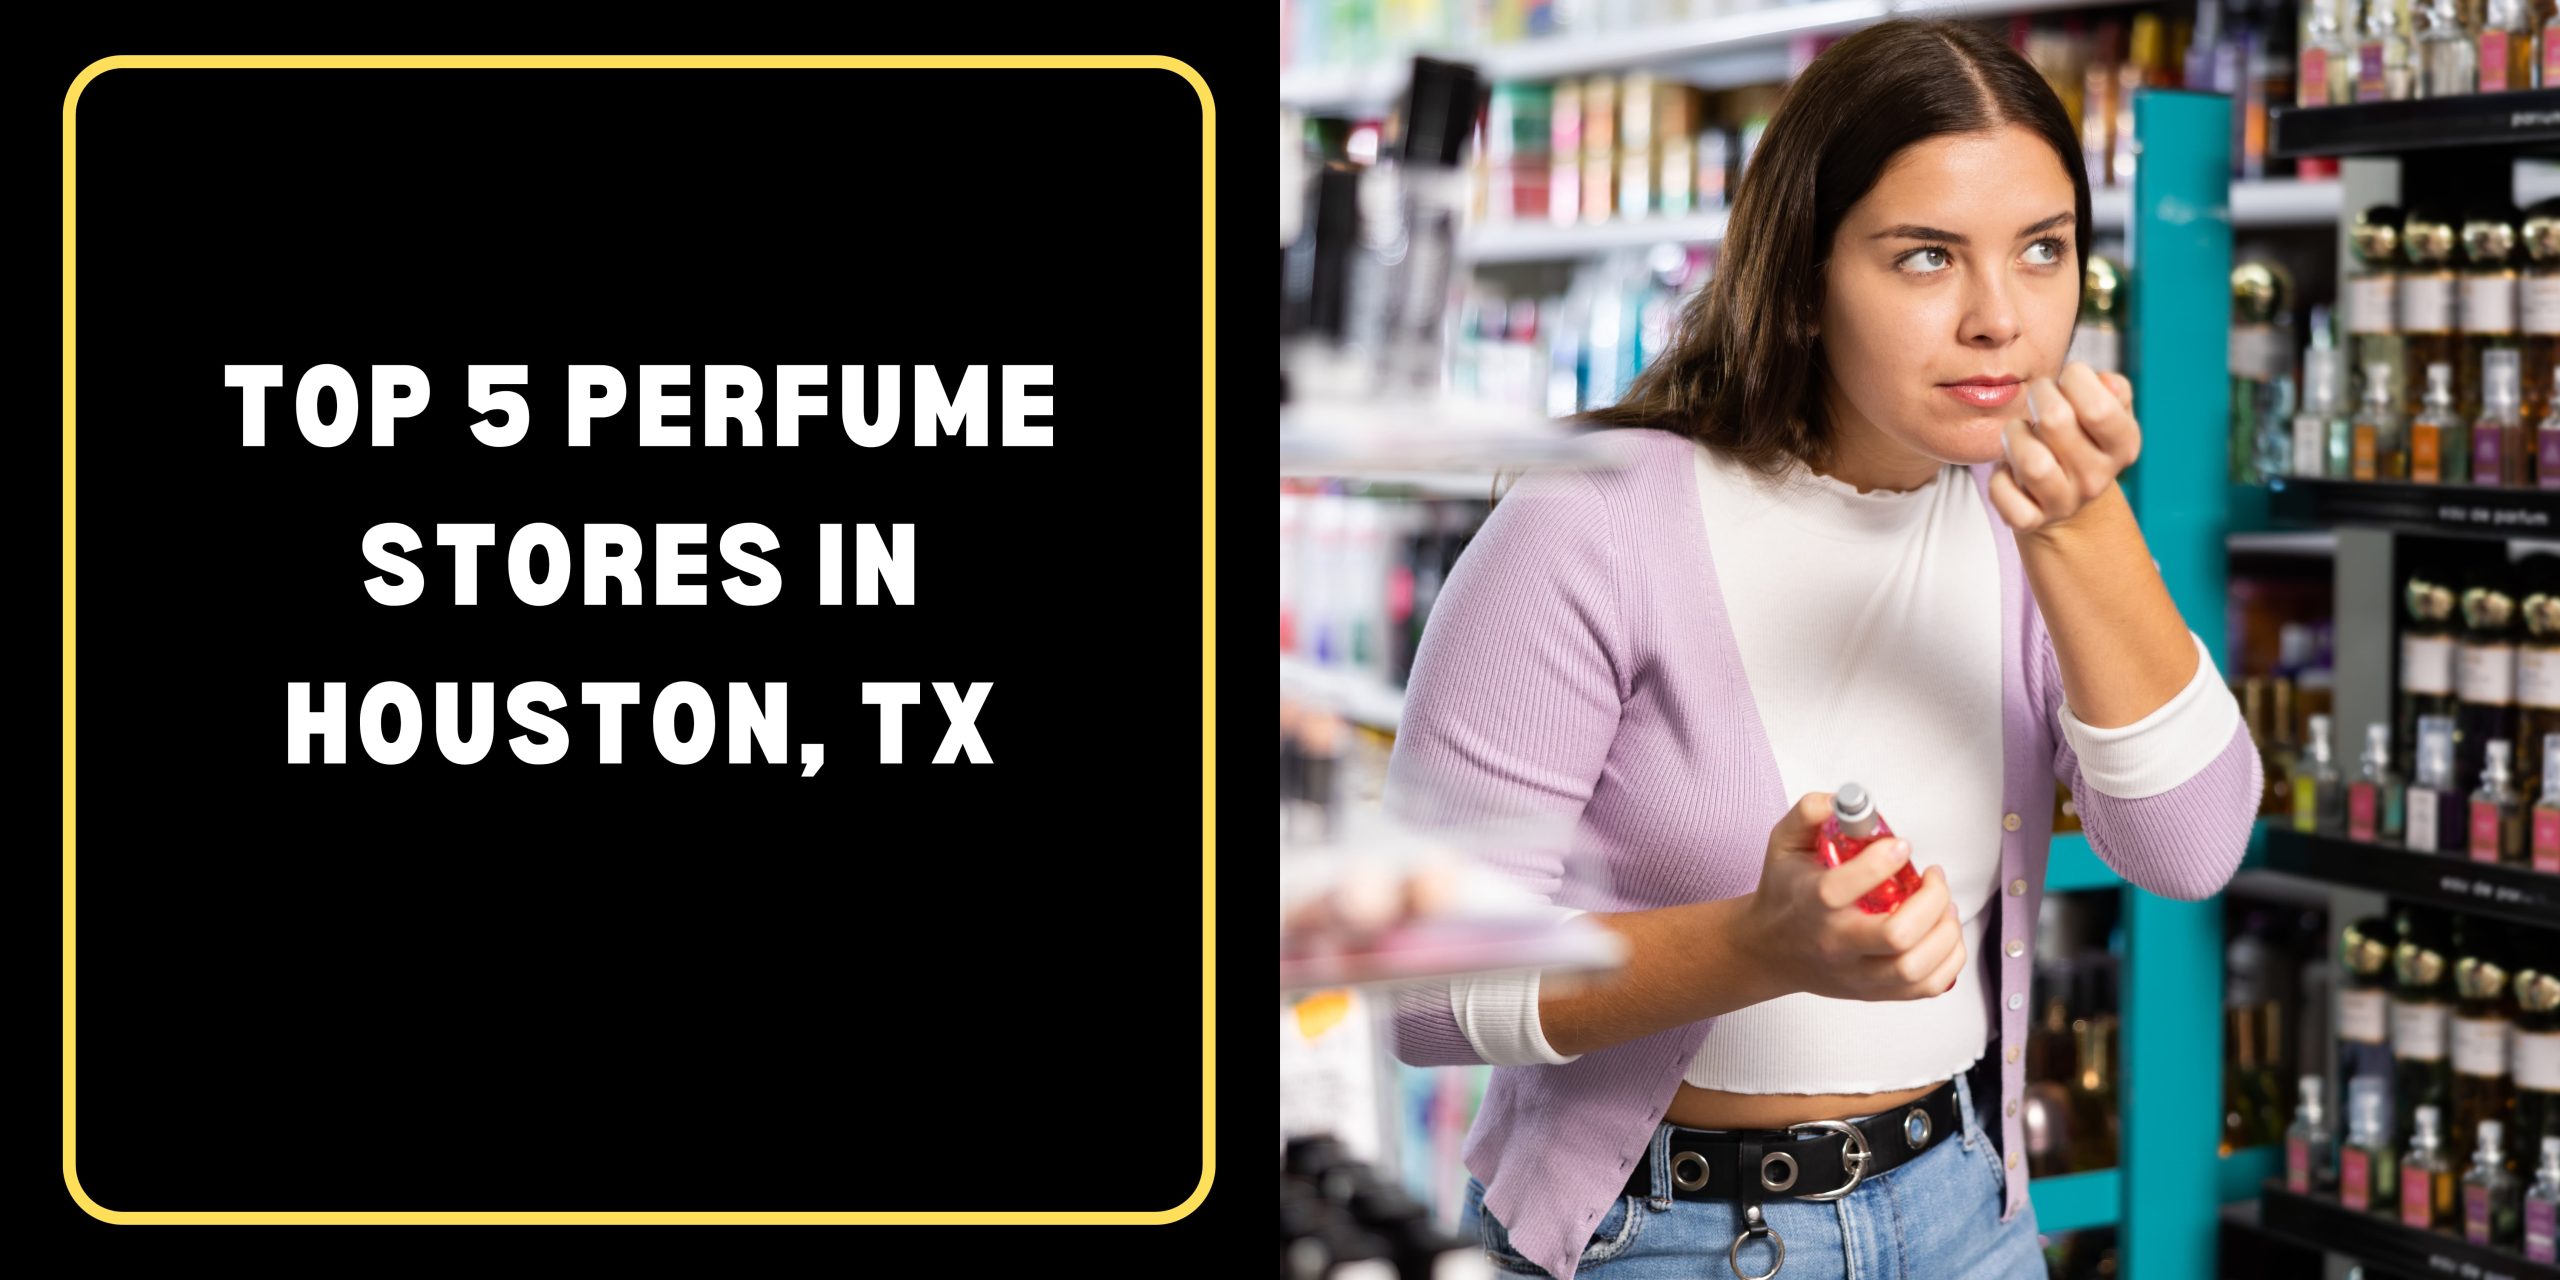 Top 5 Perfume Stores in Houston, TX